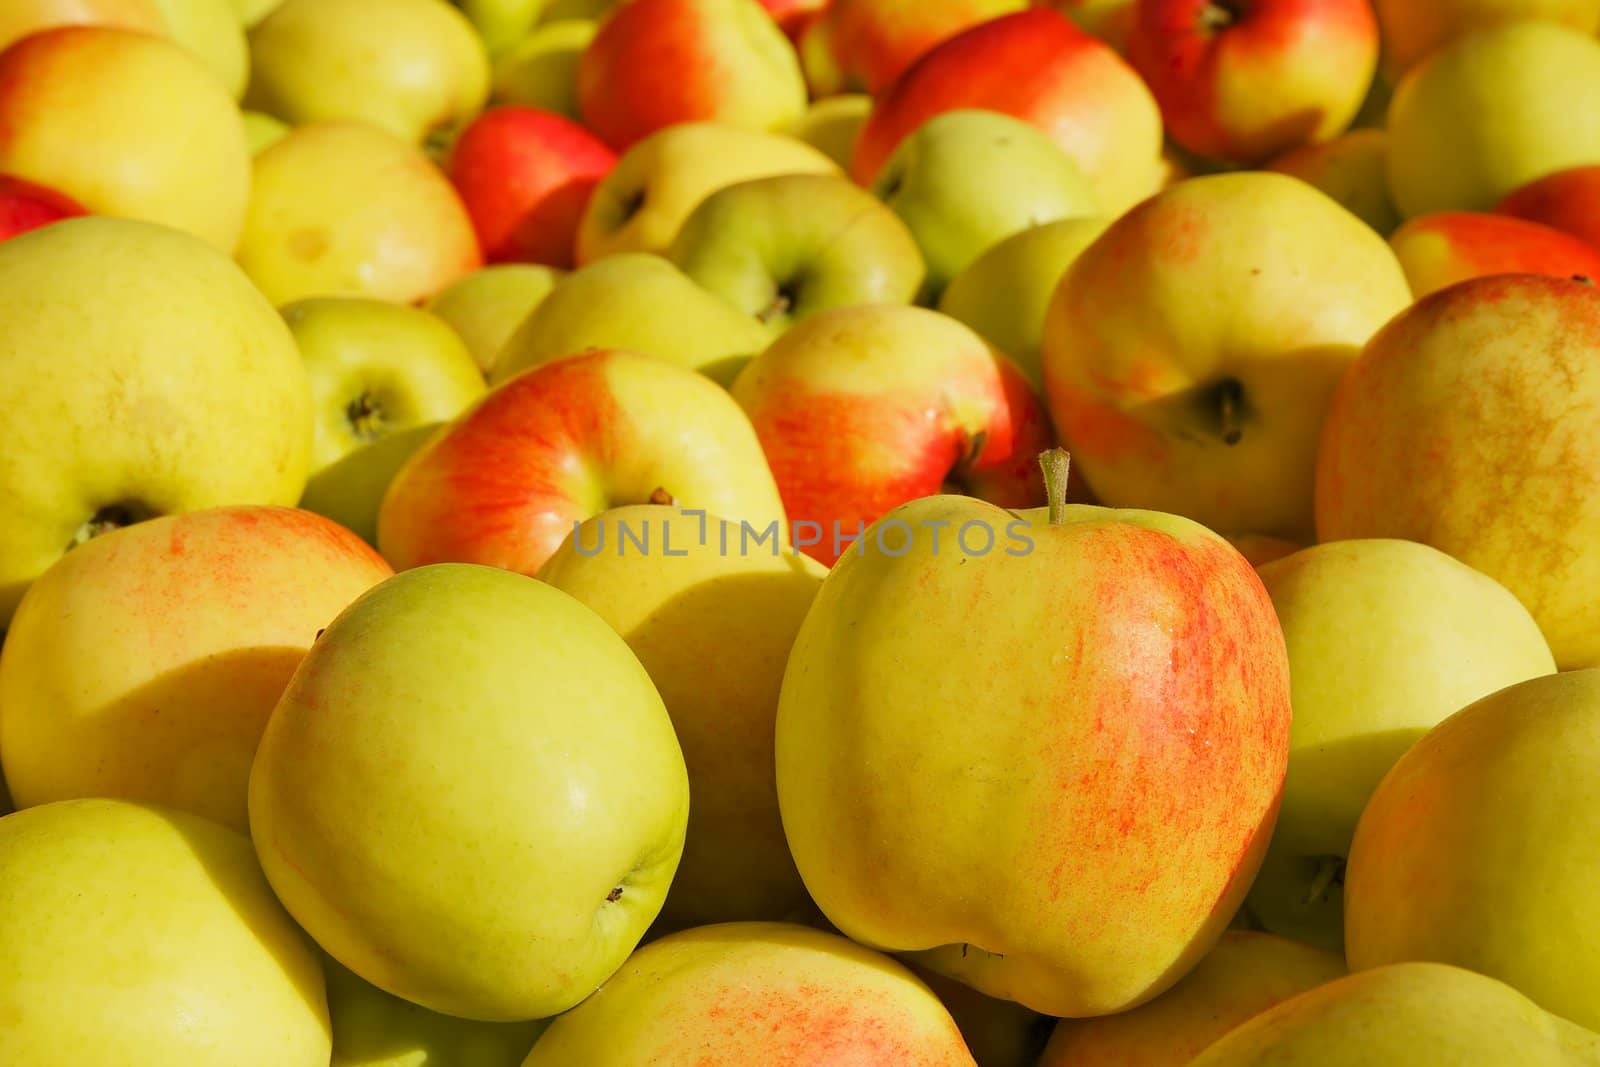 Pile of Golden apples by bobkeenan